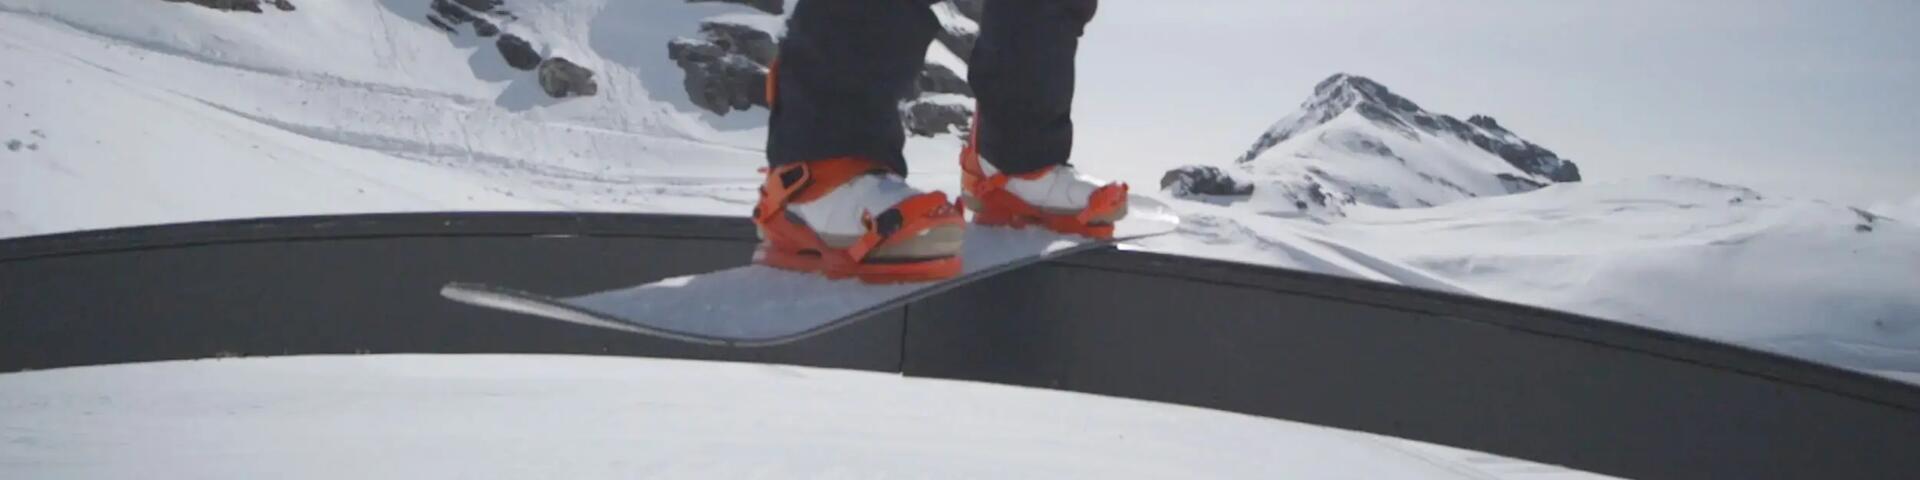 buty snowboardowe i deska